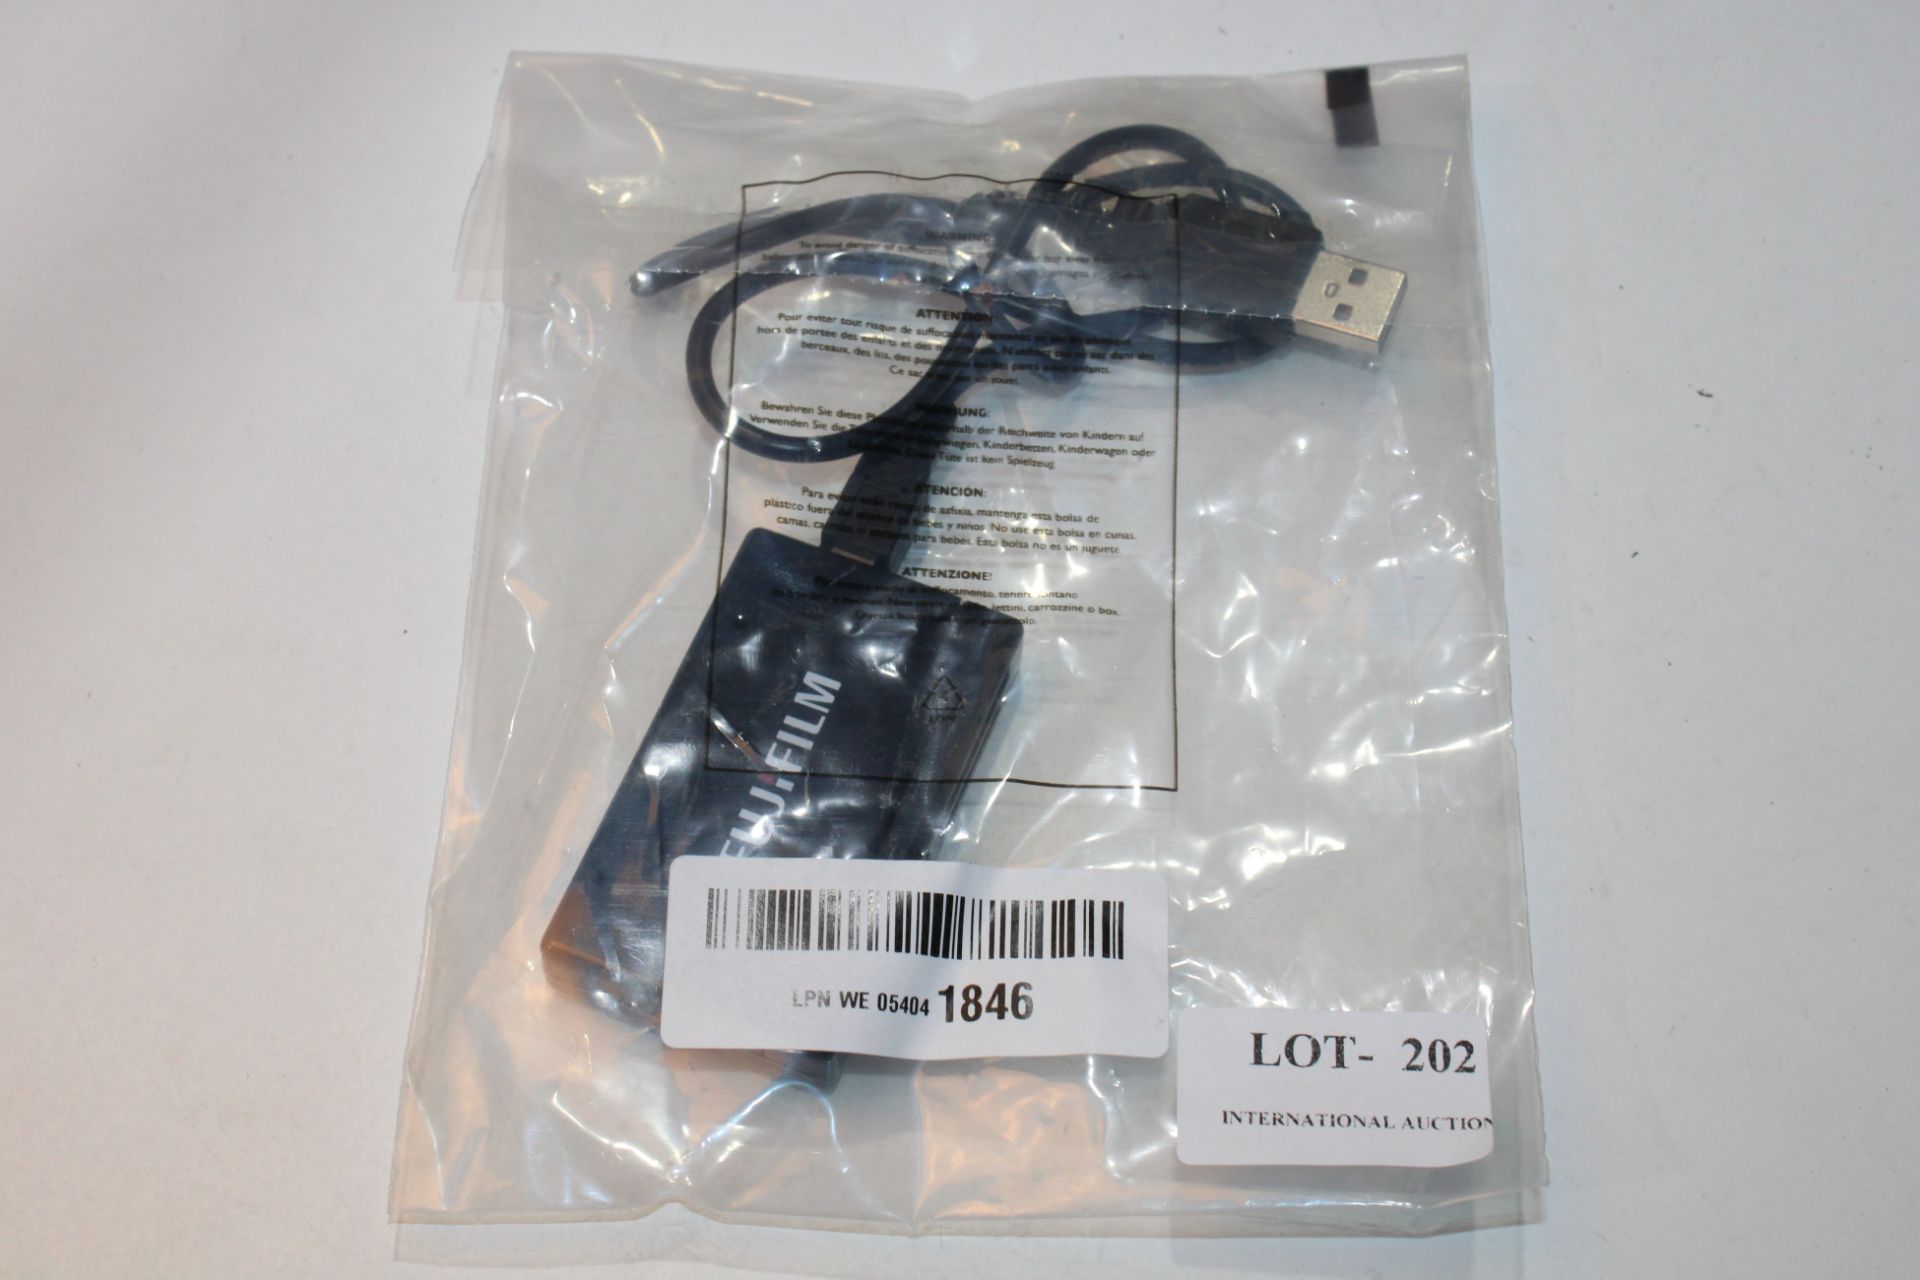 Fujifilm FUJ1365 USB Multi Card Reader - Black Â£9.99Condition ReportAppraisal Available on Request-